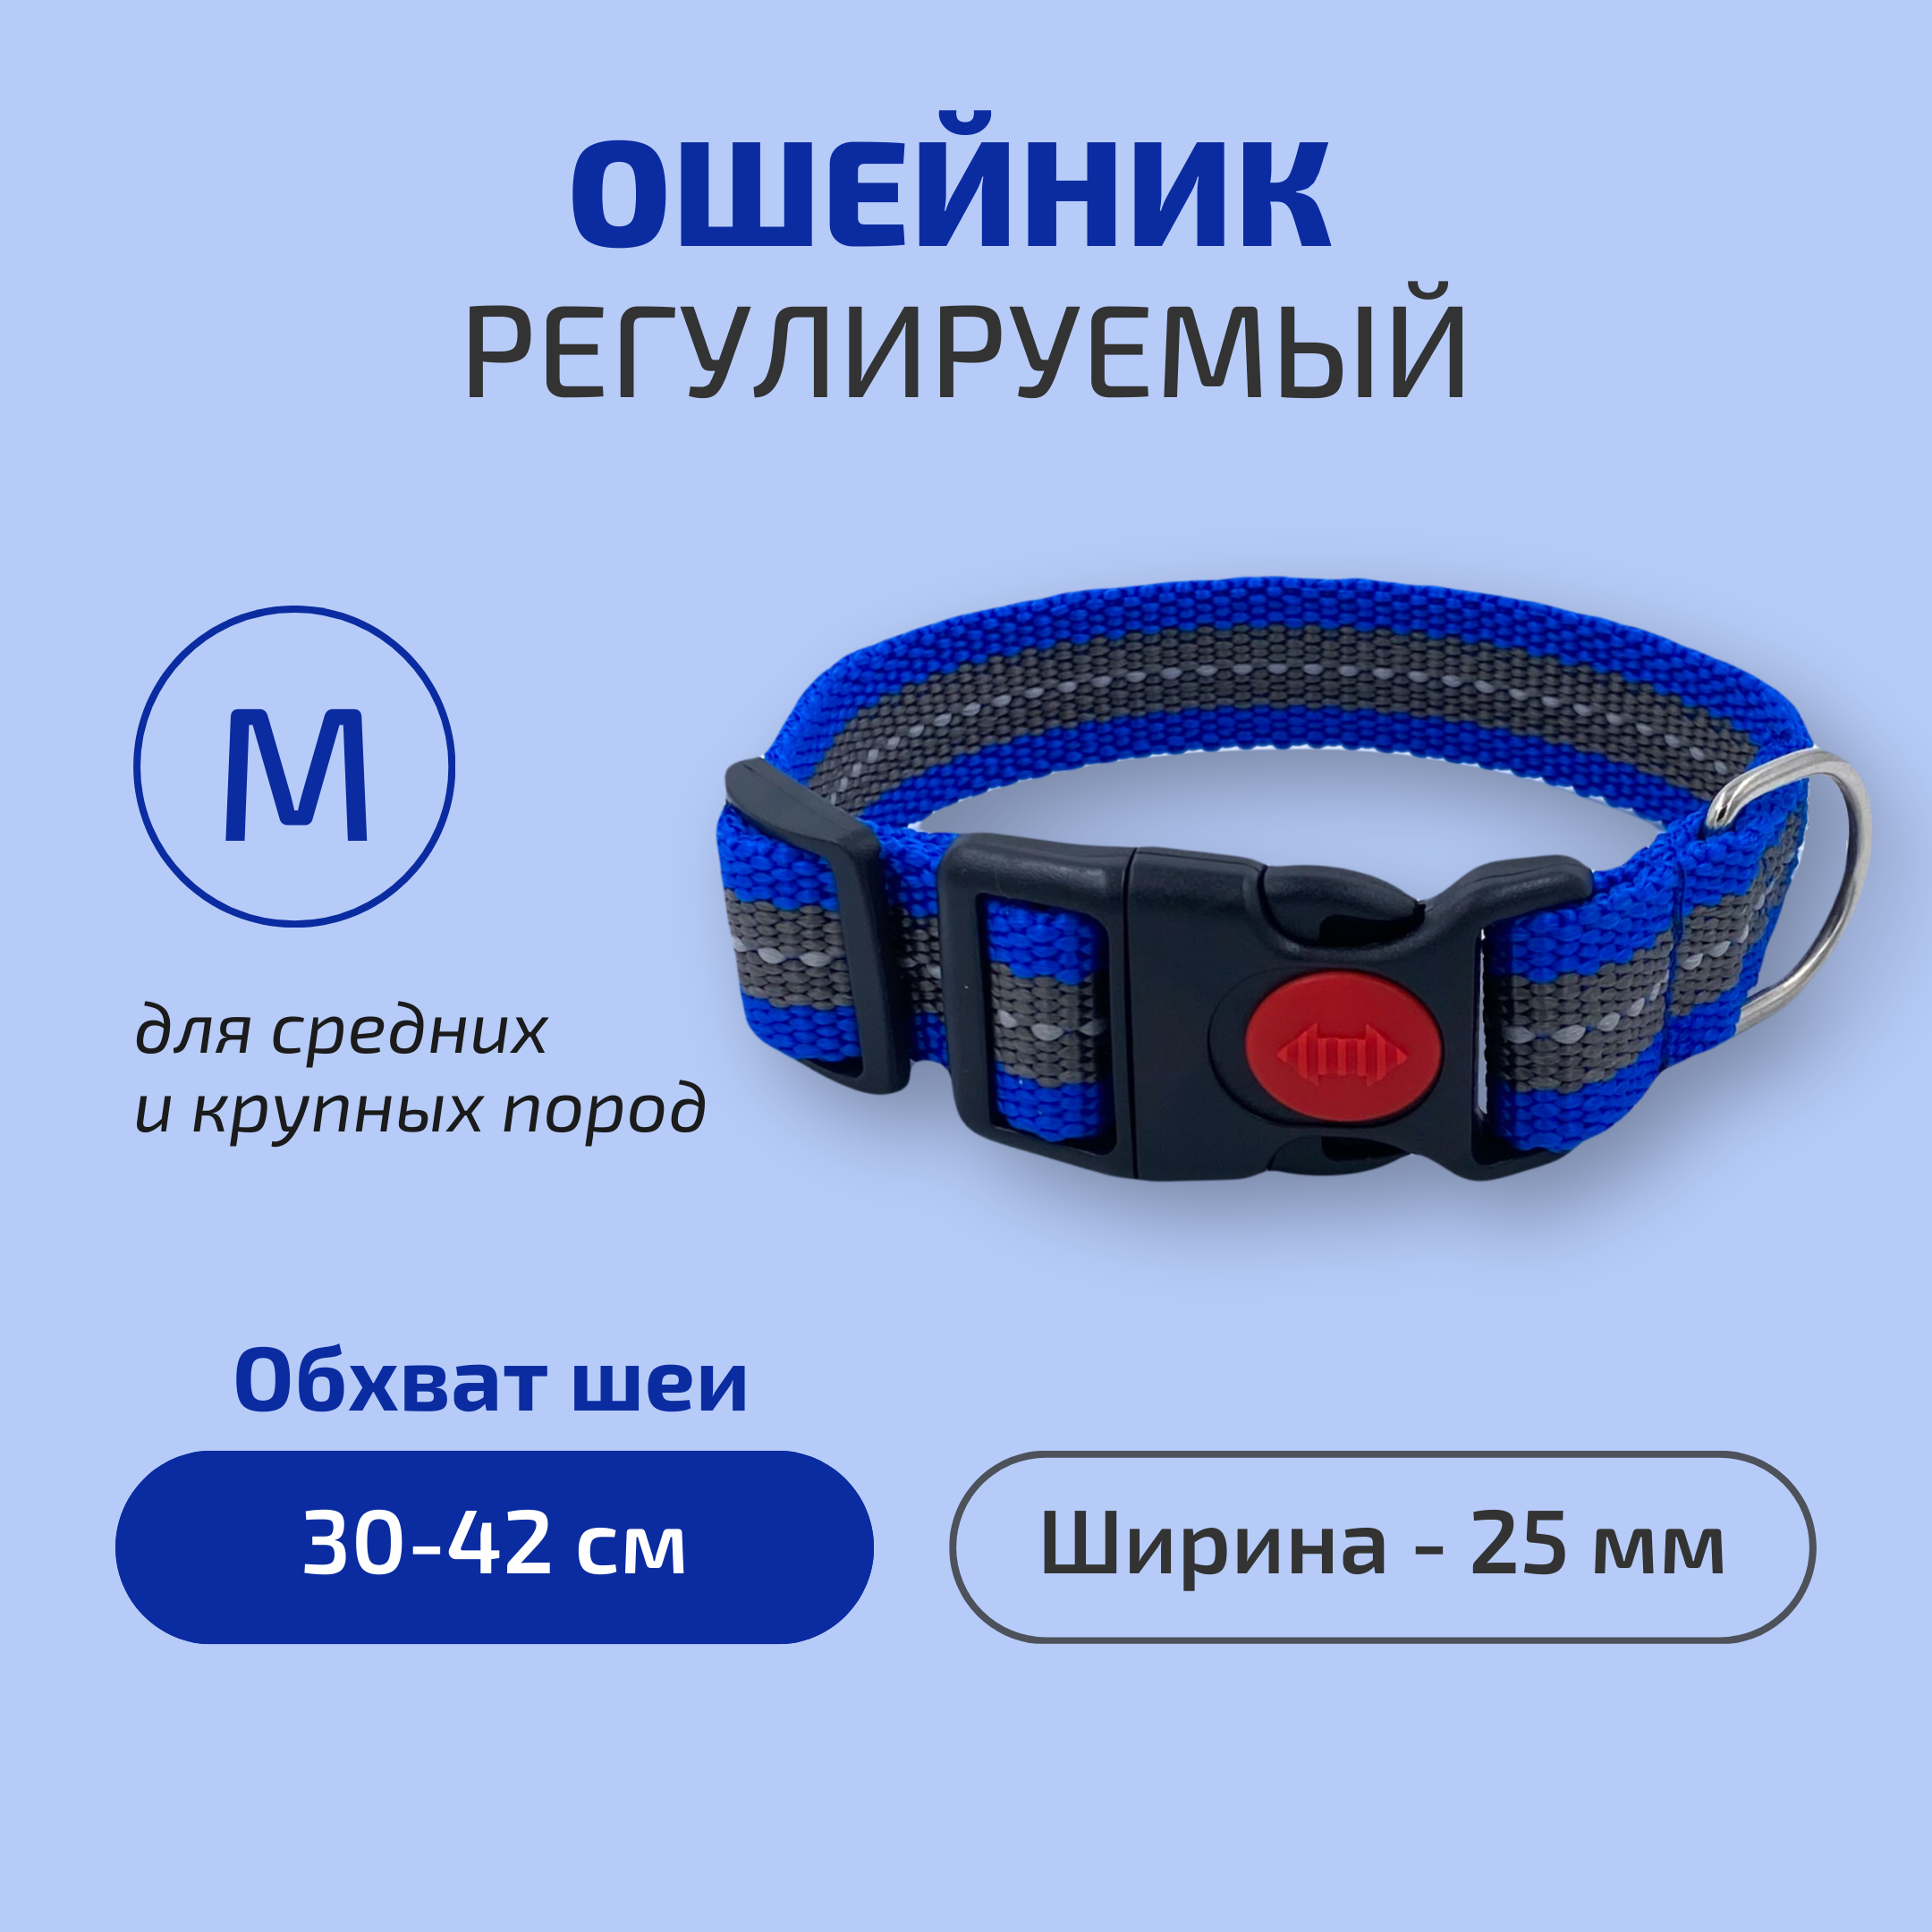 Ошейник для собак Povodki Shop сине-серый, ширина 25 мм, обхват шеи 30-42 см